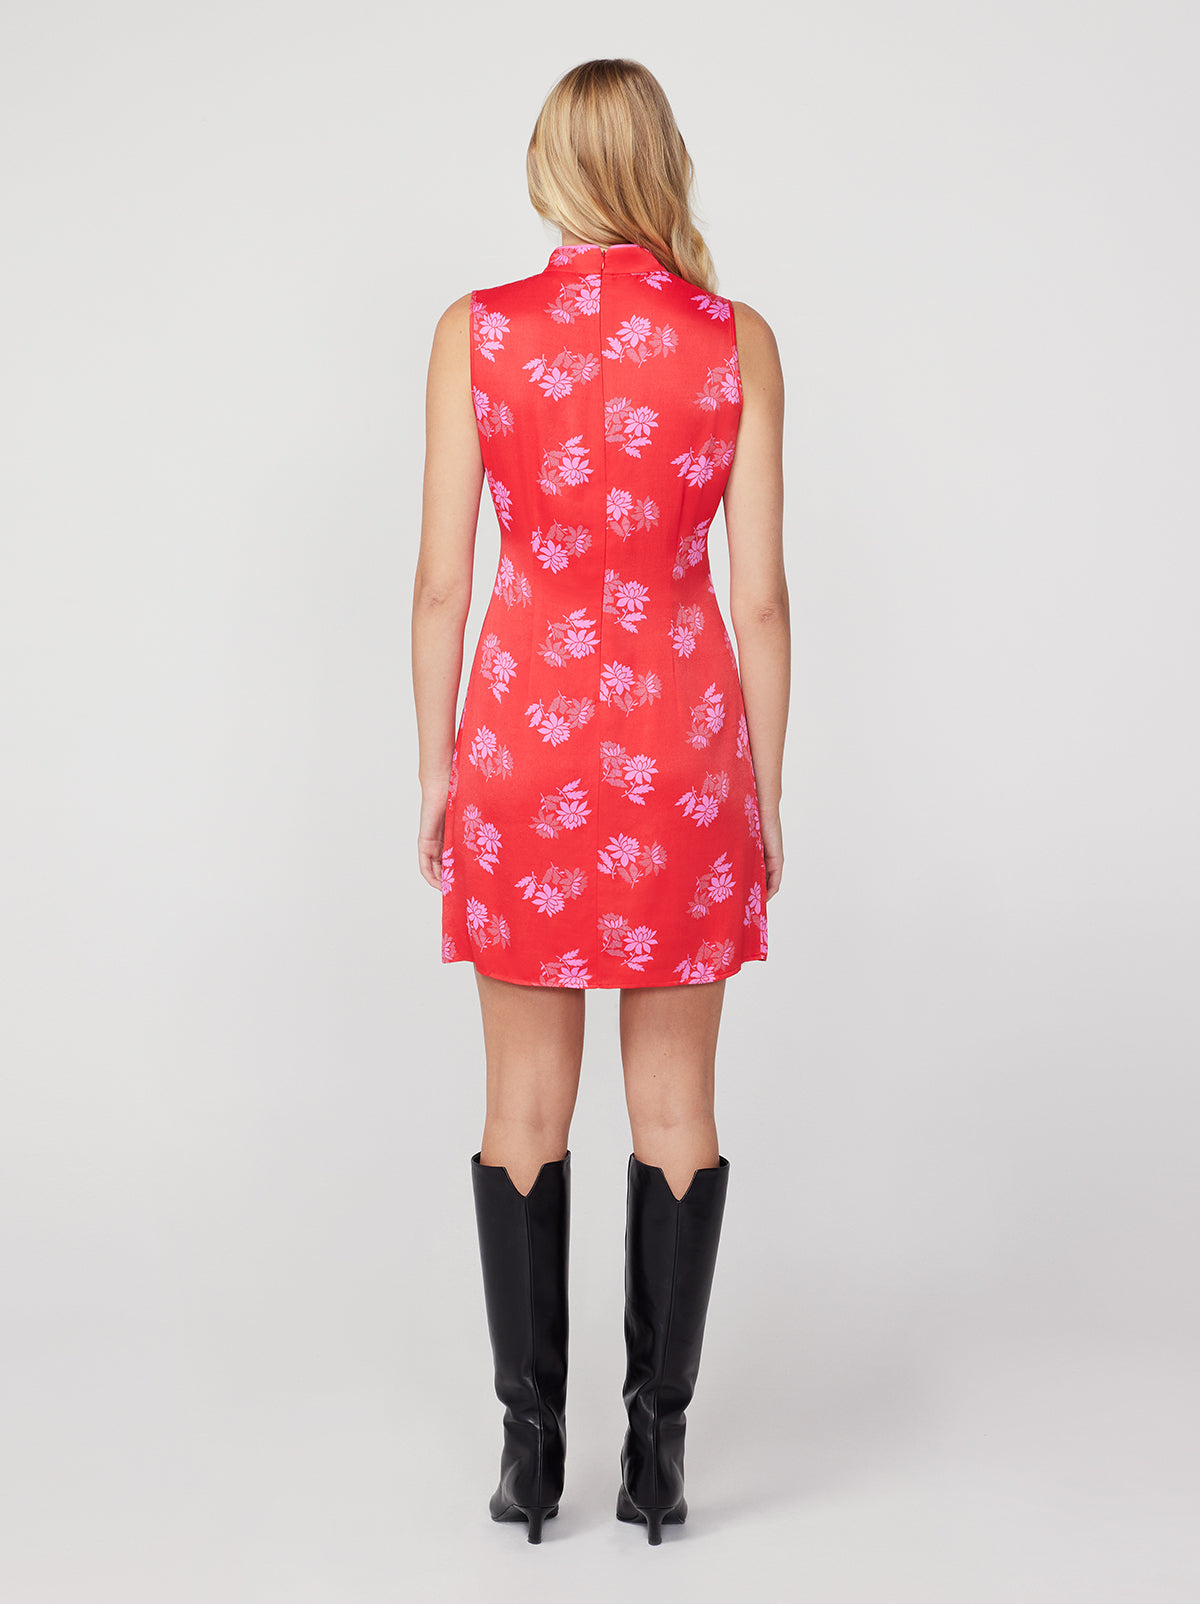 Aubrey Red Floral Mini Dress By KITRI Studio